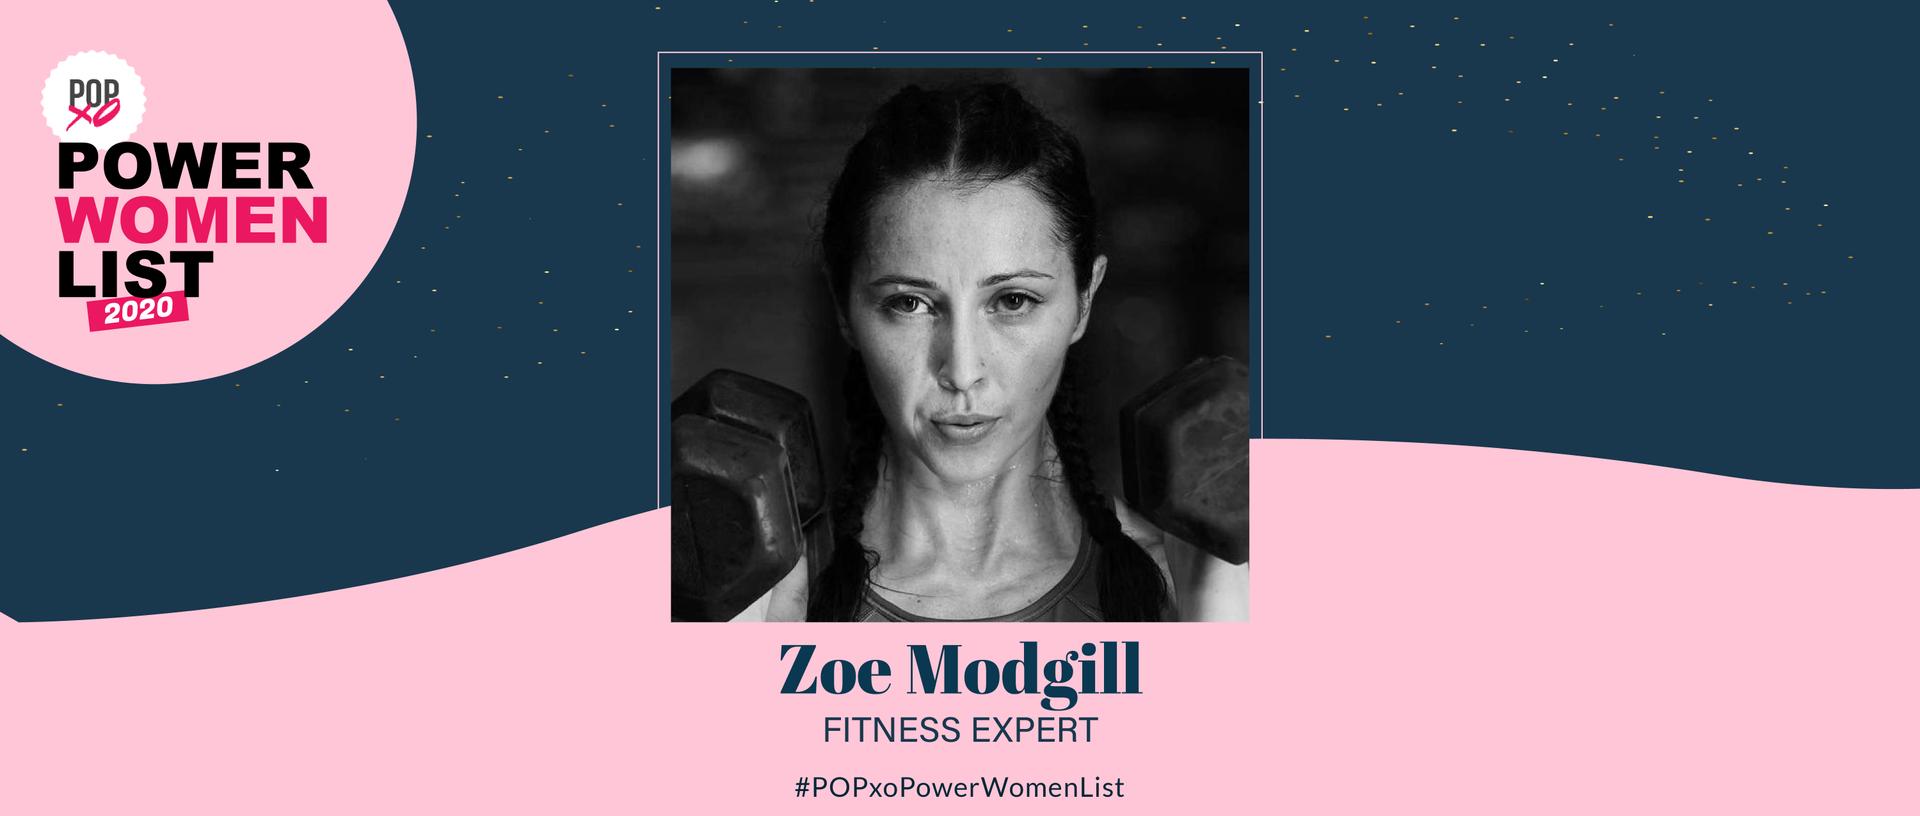 POPxo Power Women List 2020: Zoe Modgill, The Fitness Expert Who Got India Moving